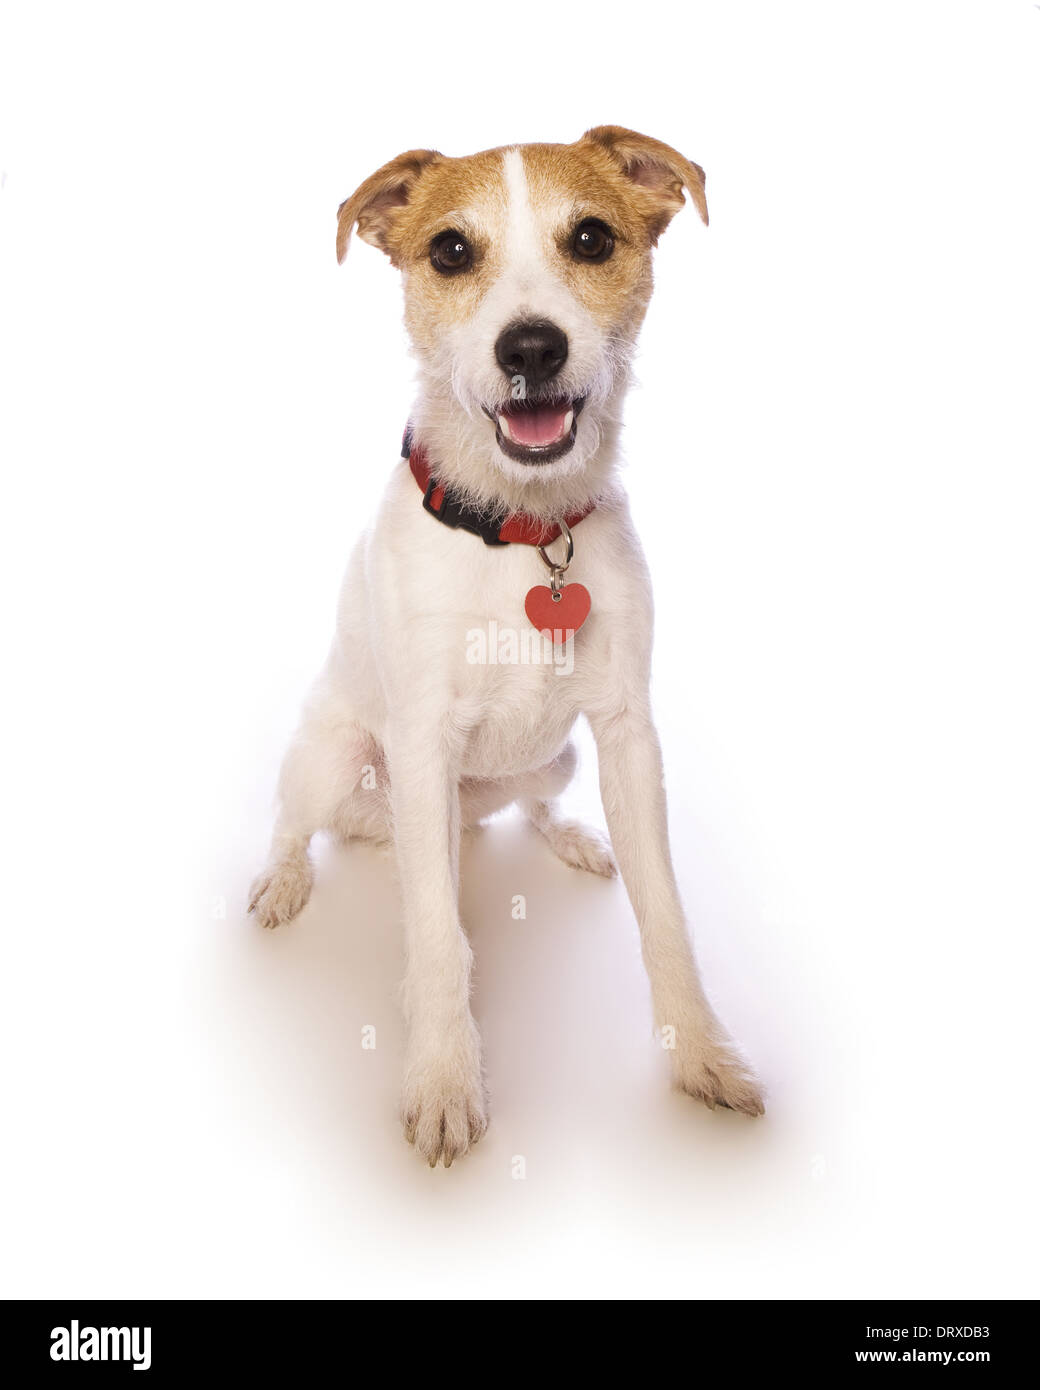 Lanyard Terrier Jack Russell Dog Ribbon ID Badge Holder 